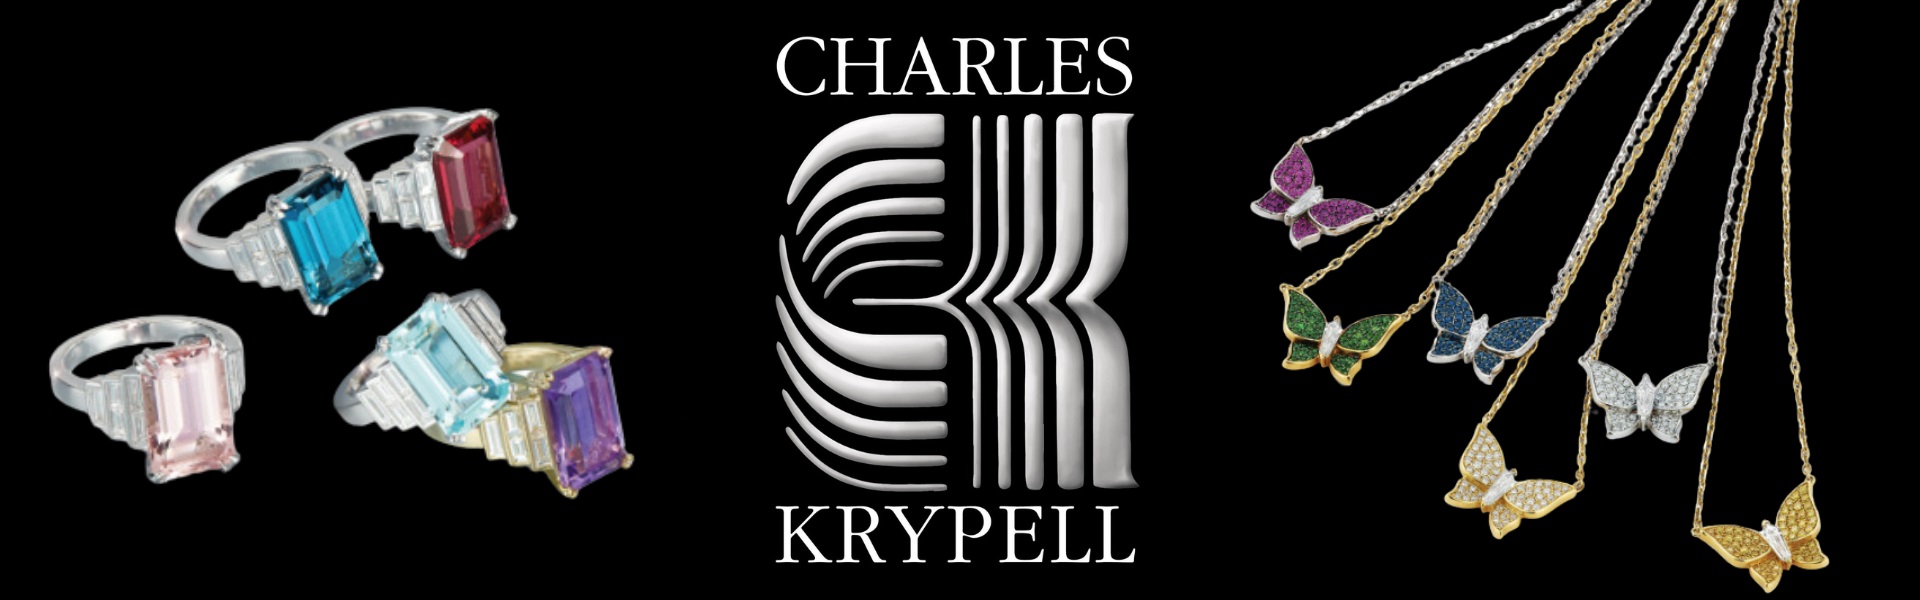 All Charles Krypell